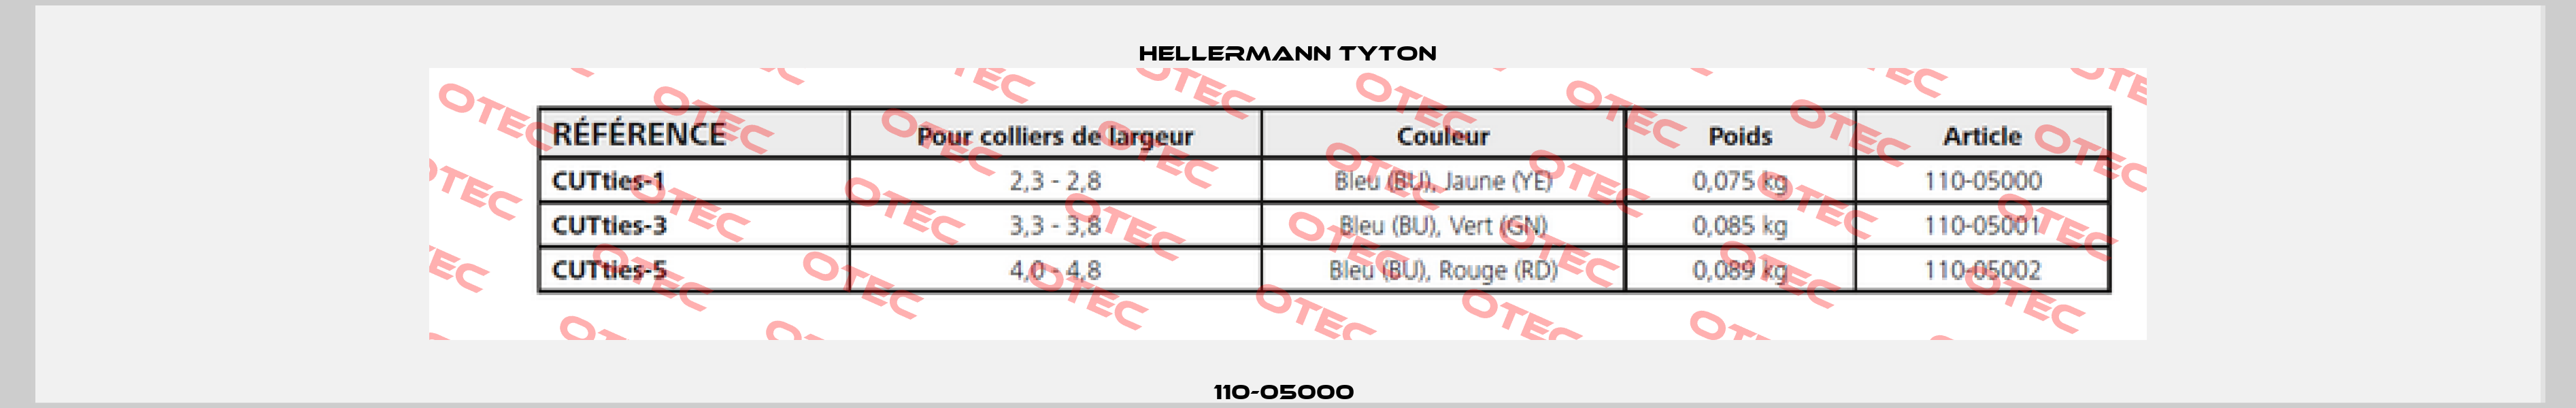 110-05000  Hellermann Tyton